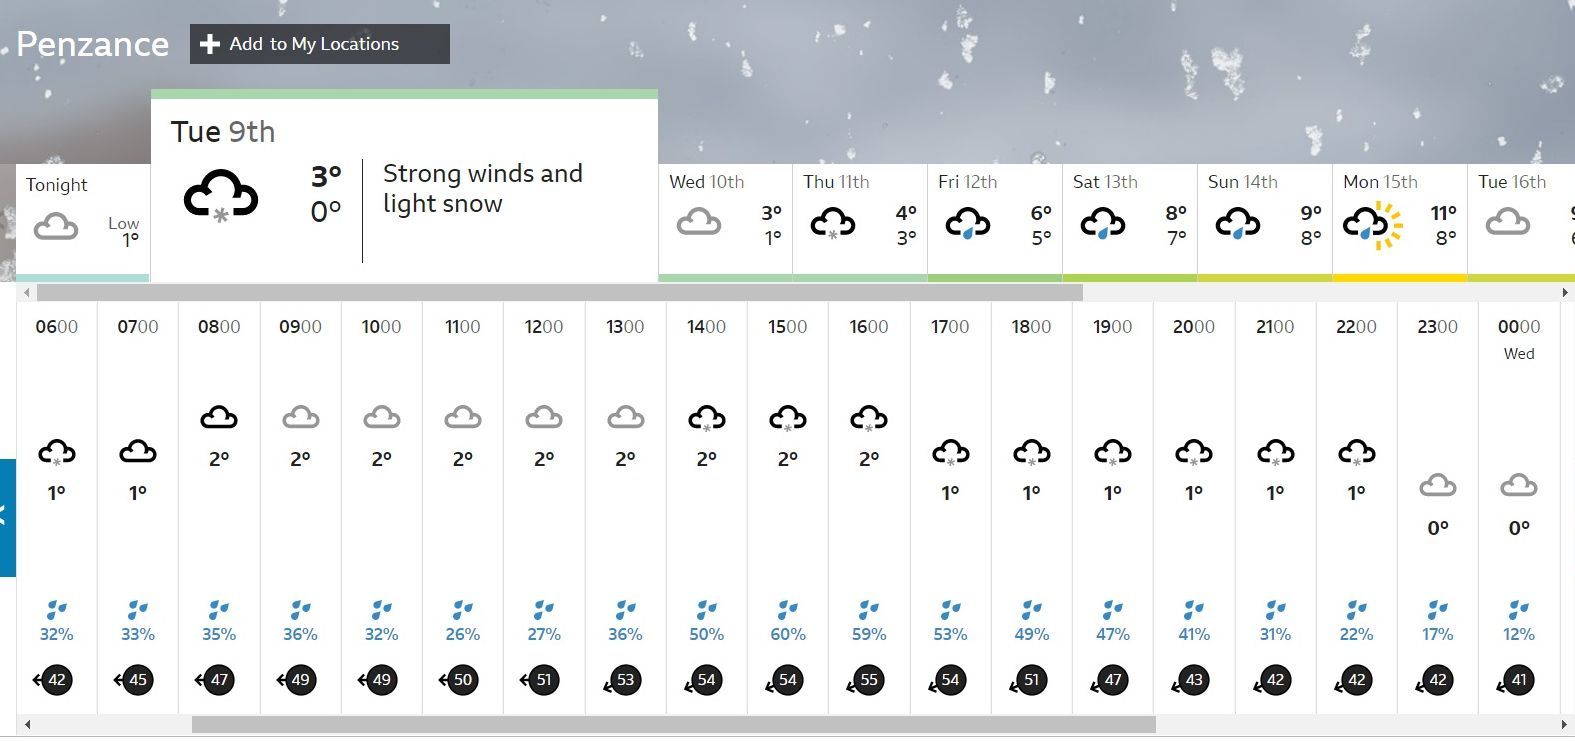 Tuesdays weather forecast for Penzance